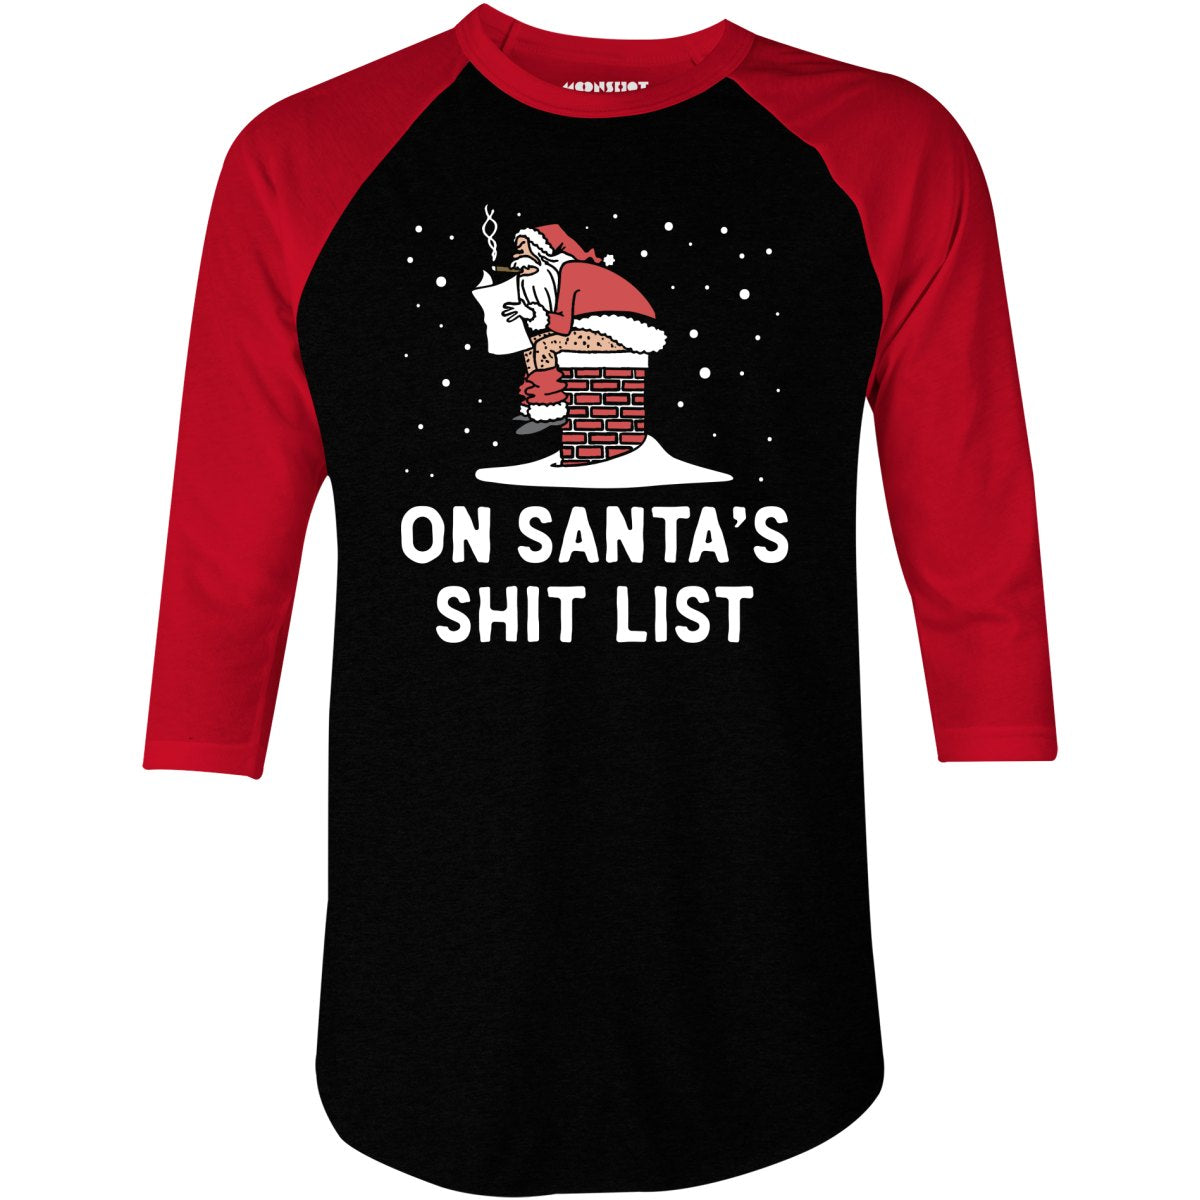 On Santa's Shit List - 3/4 Sleeve Raglan T-Shirt